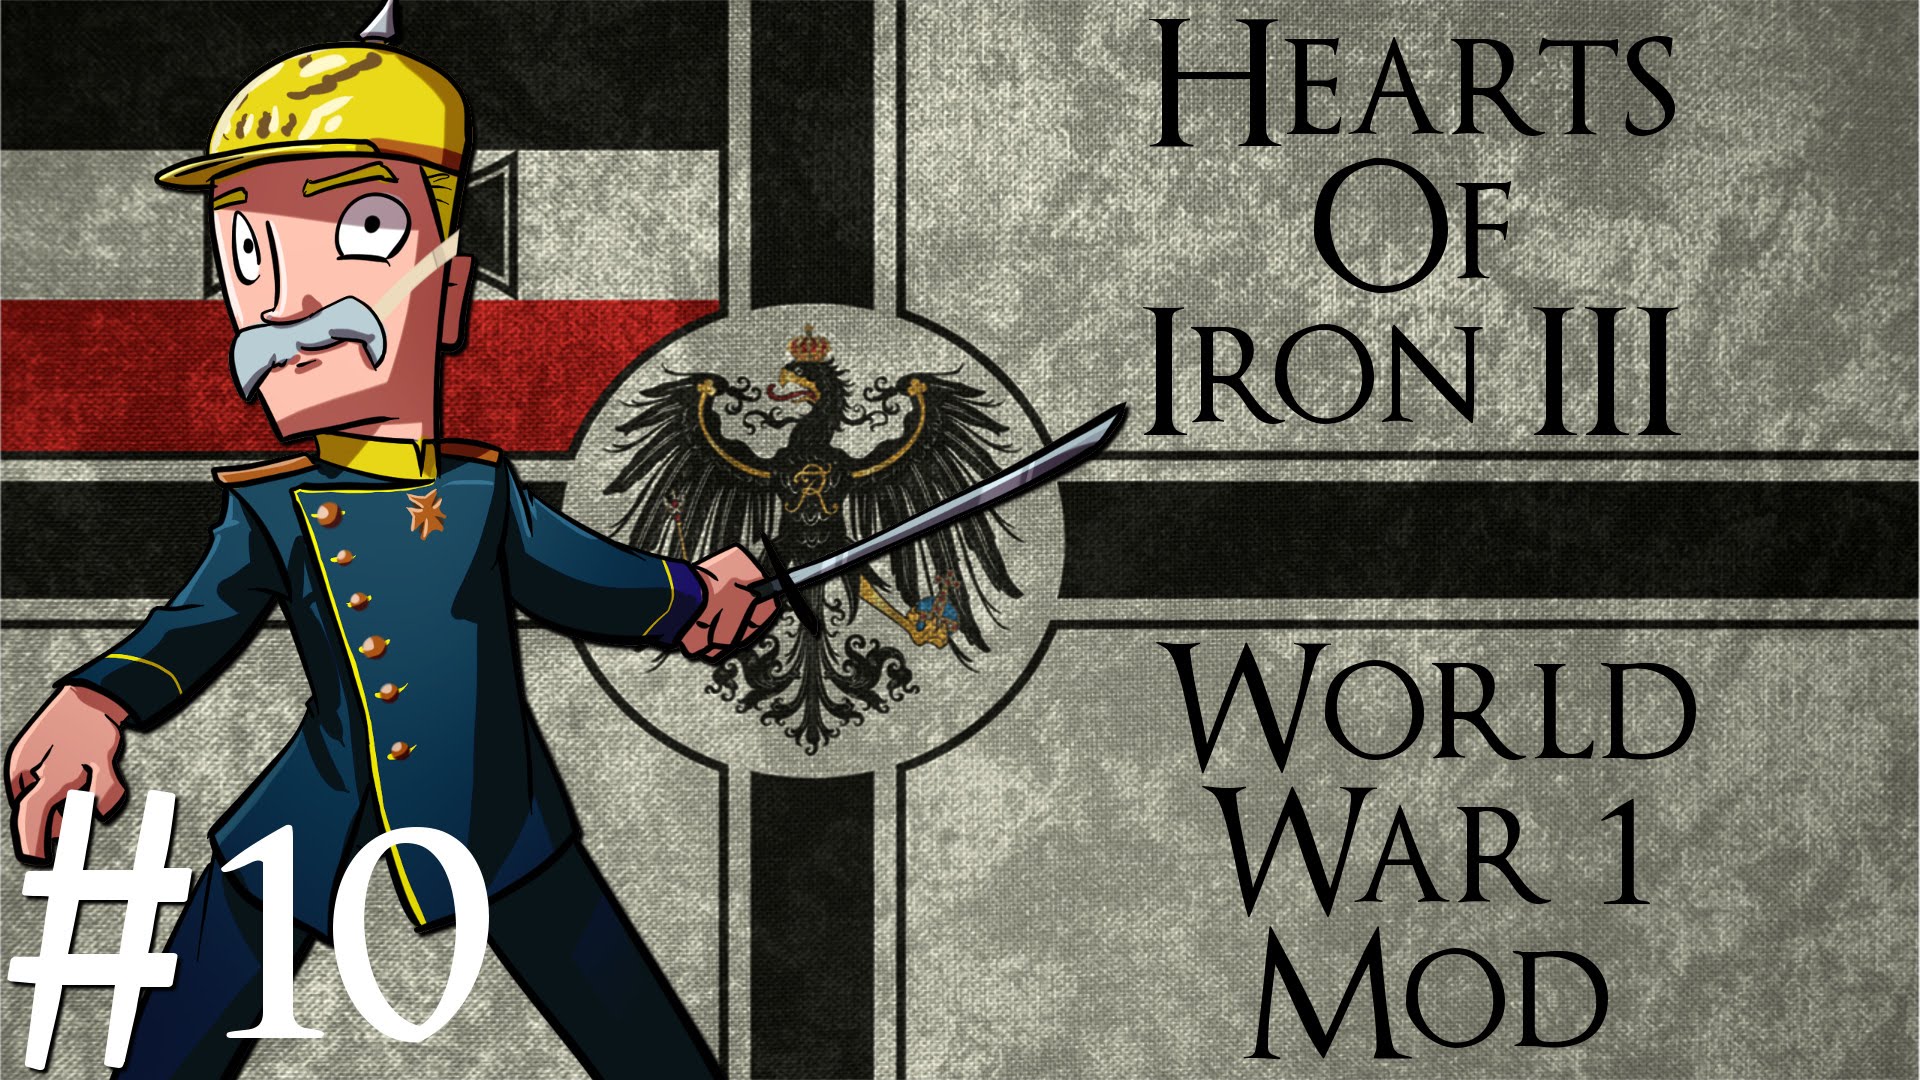 Hearts of Iron 3 | World War 1 mod | German Empire | Part 10 | Stalemate Broken